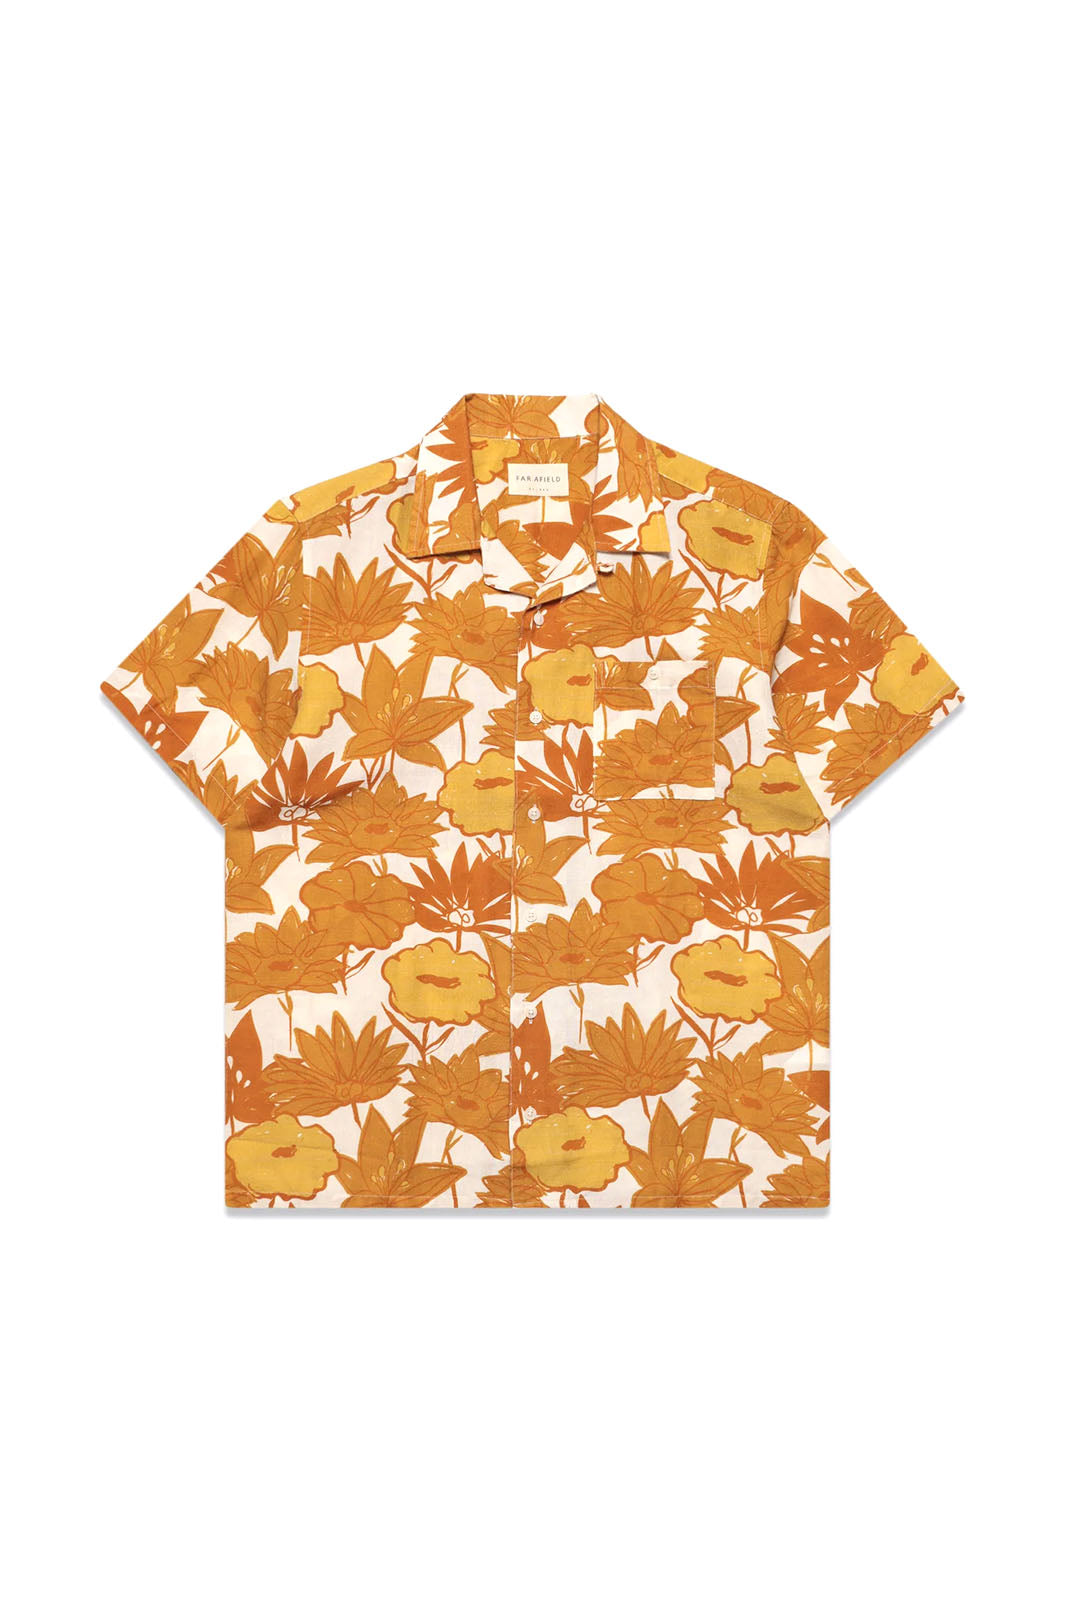 Selleck Shirt - Honey Gold Flower Collage Print